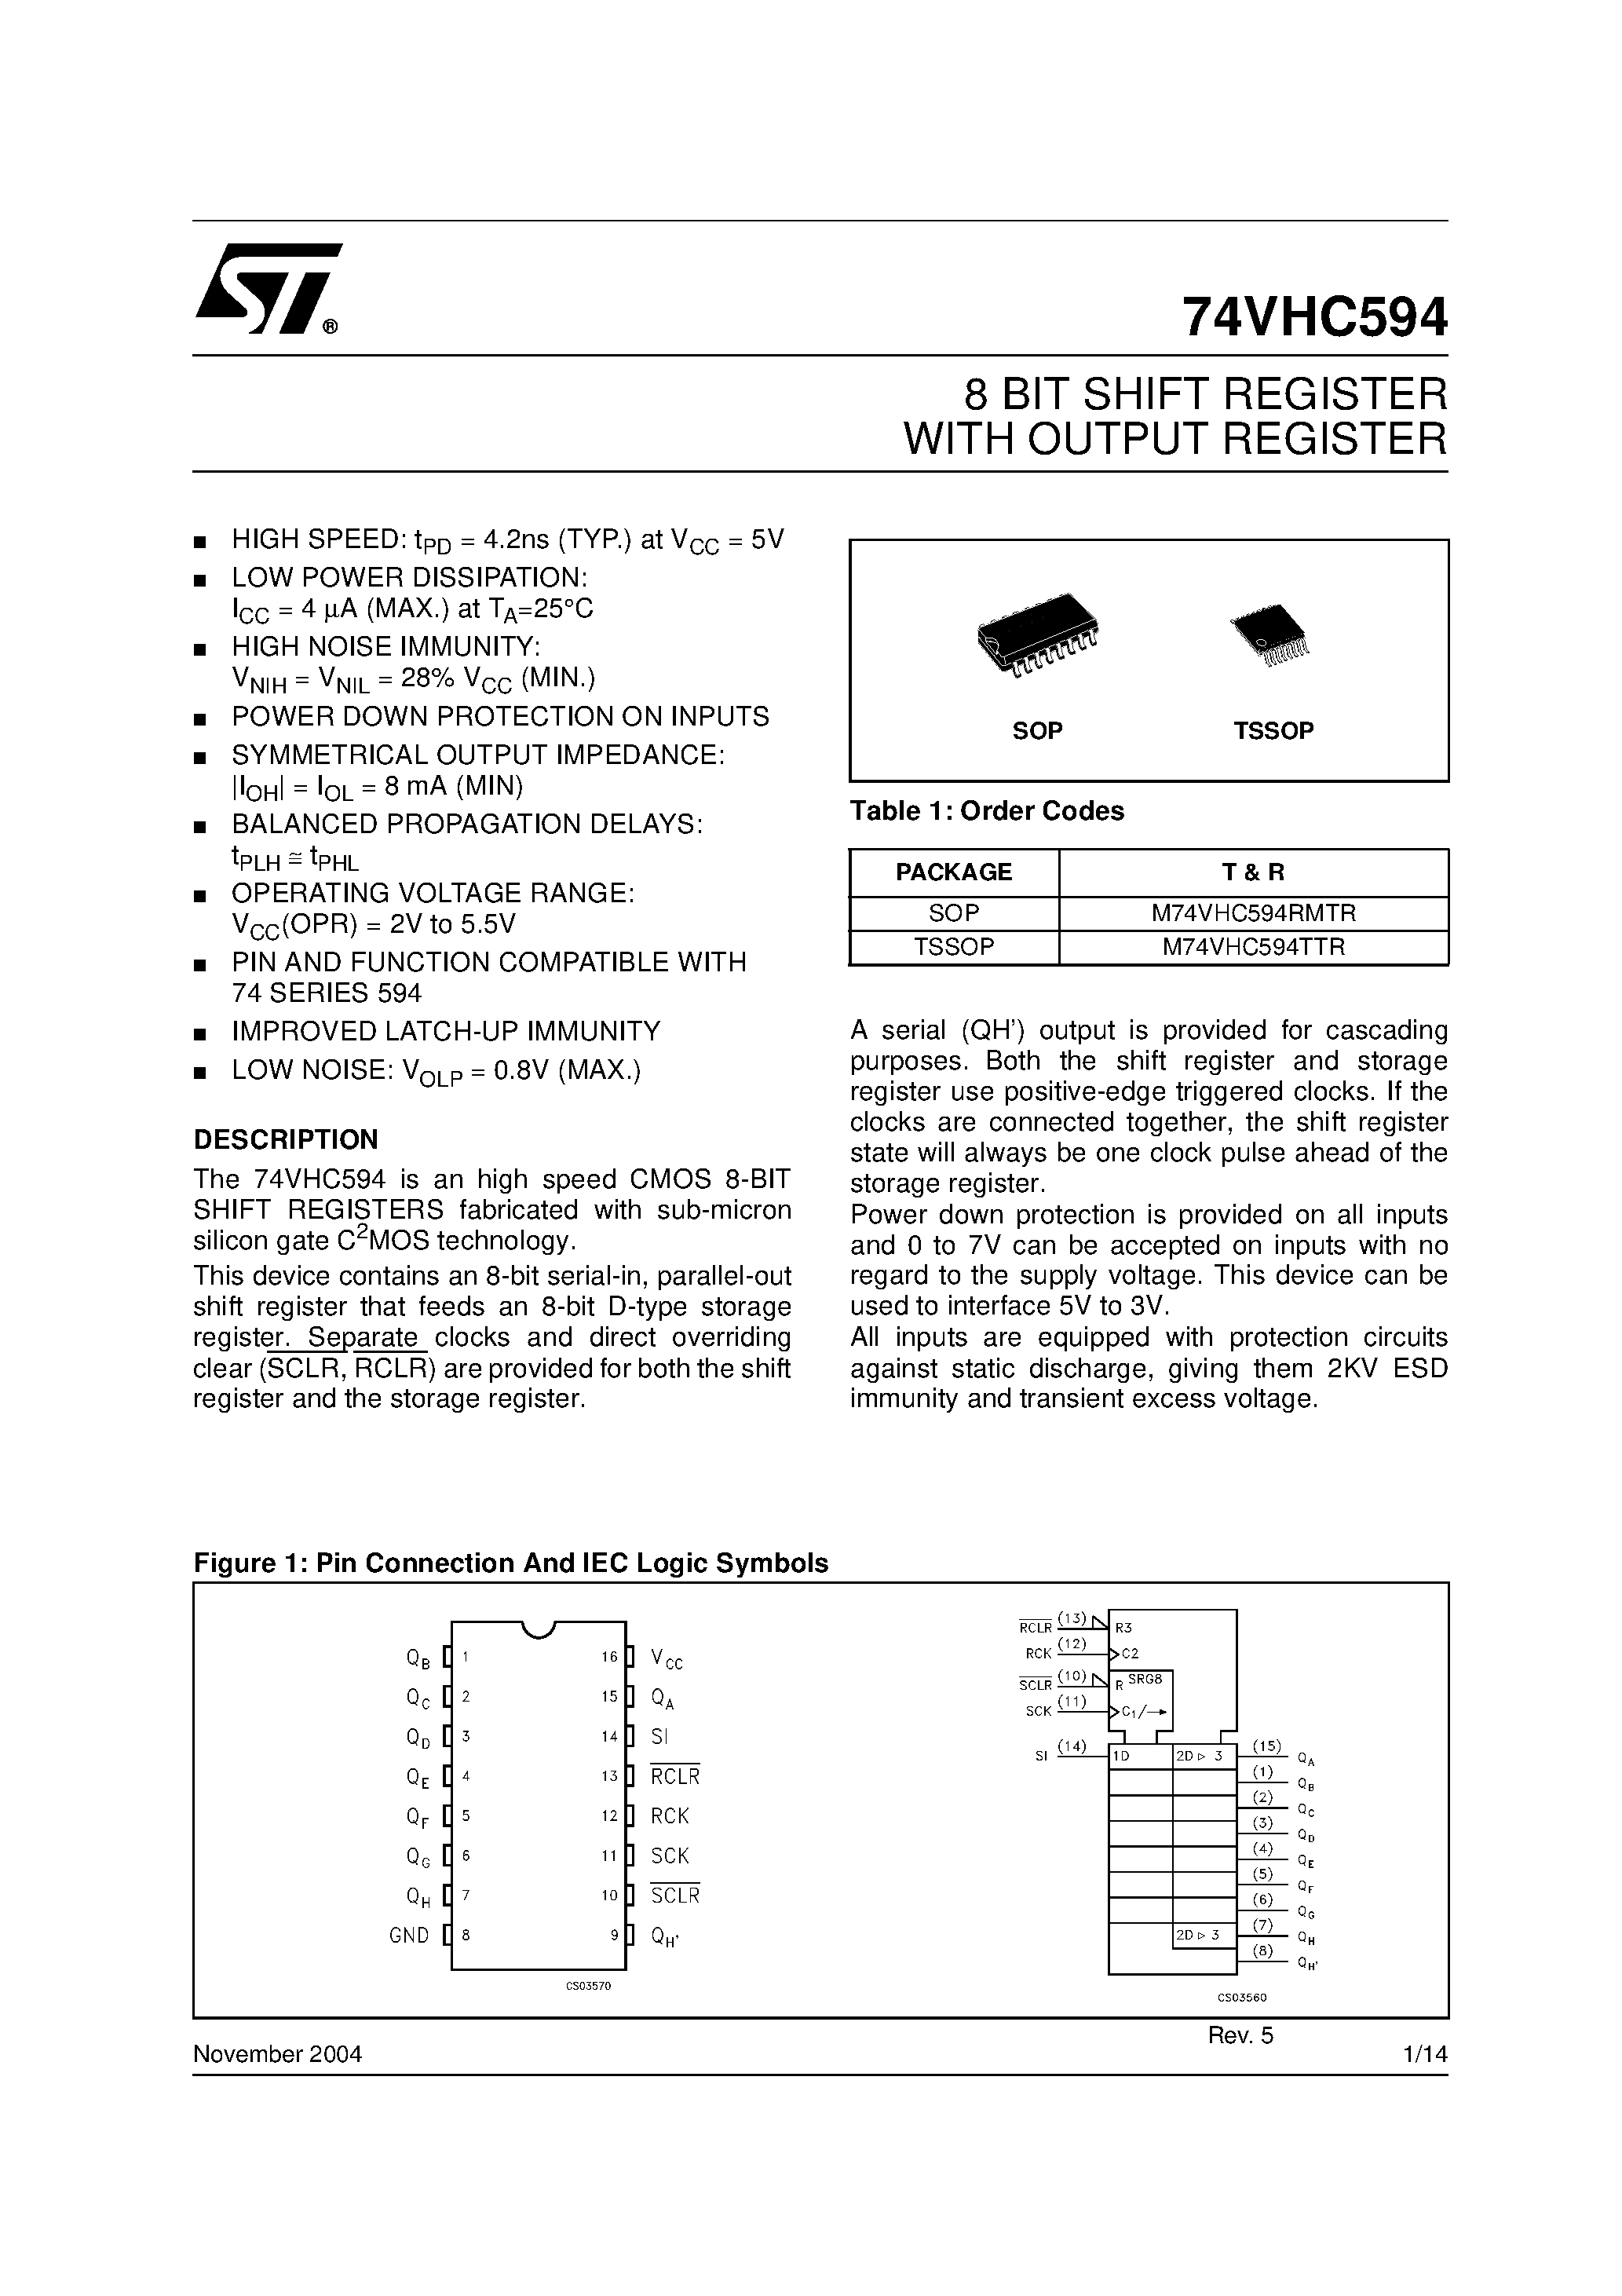 Datasheet M74VHC594TTR - 8 BIT SHIFT REGISTER WITH OUTPUT REGISTER page 1